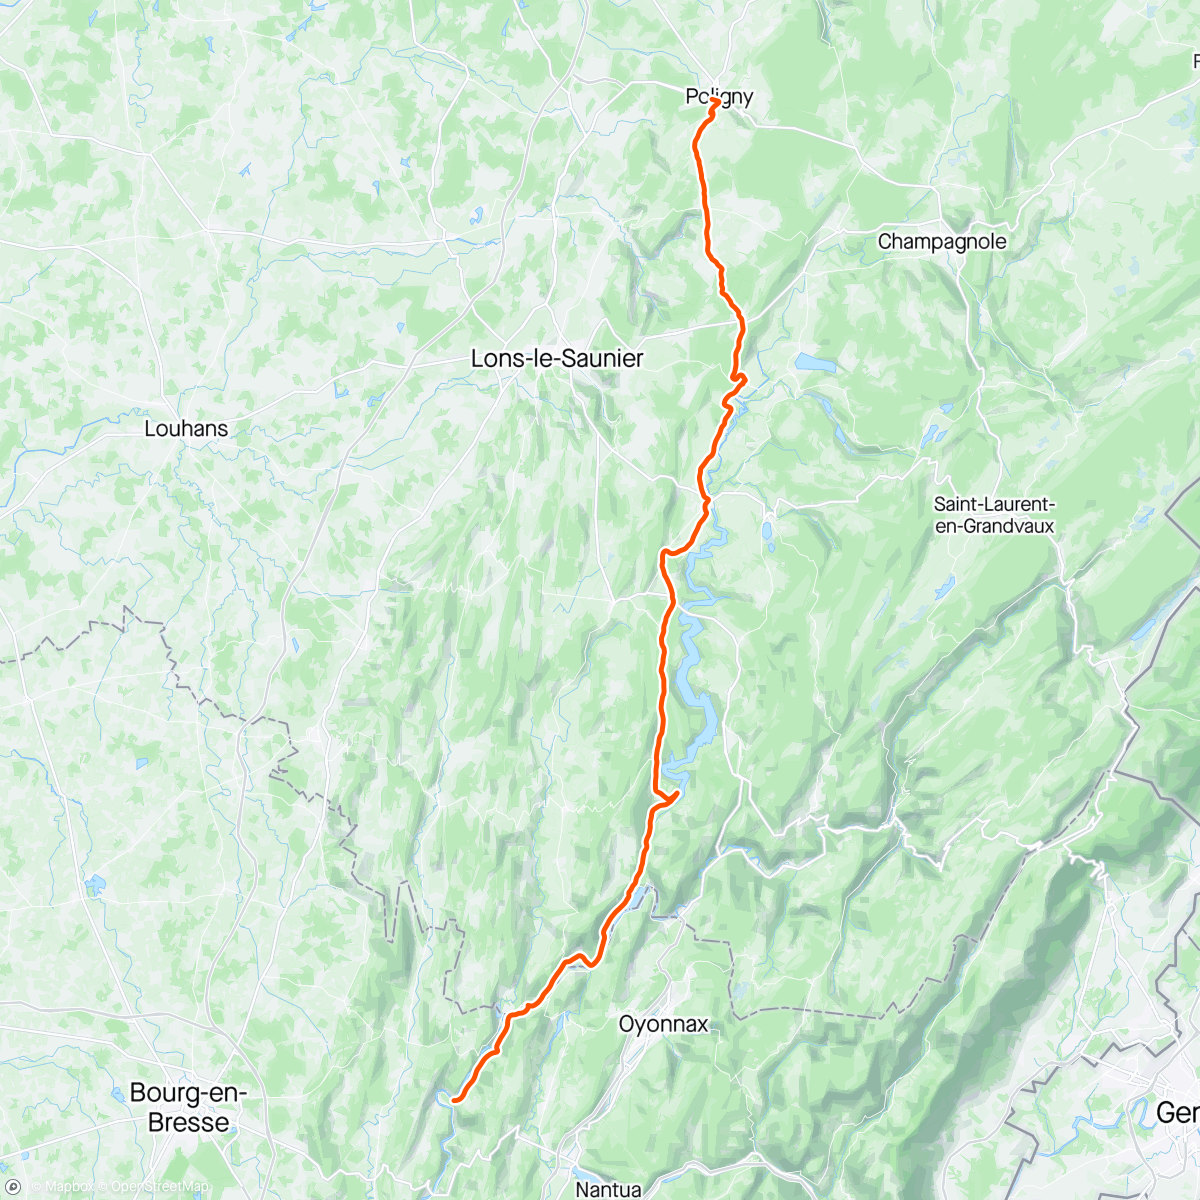 Mapa da atividade, Groene weg, etappe 6: Poligny - L’isle D’Abeau 190km